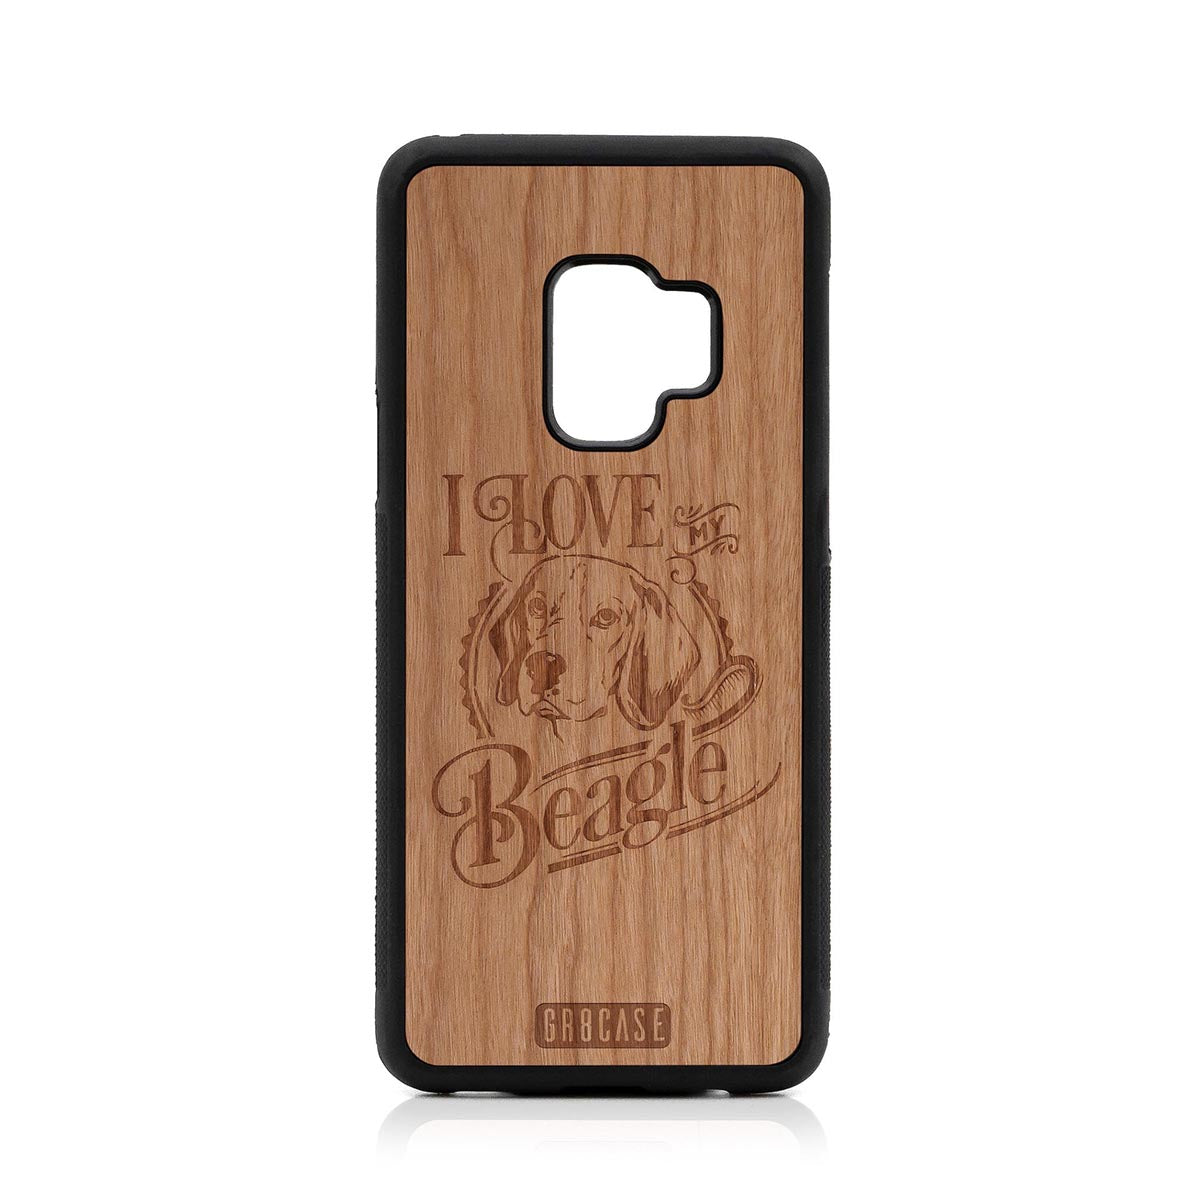 I Love My Beagle Design Wood Case Samsung Galaxy S9 by GR8CASE